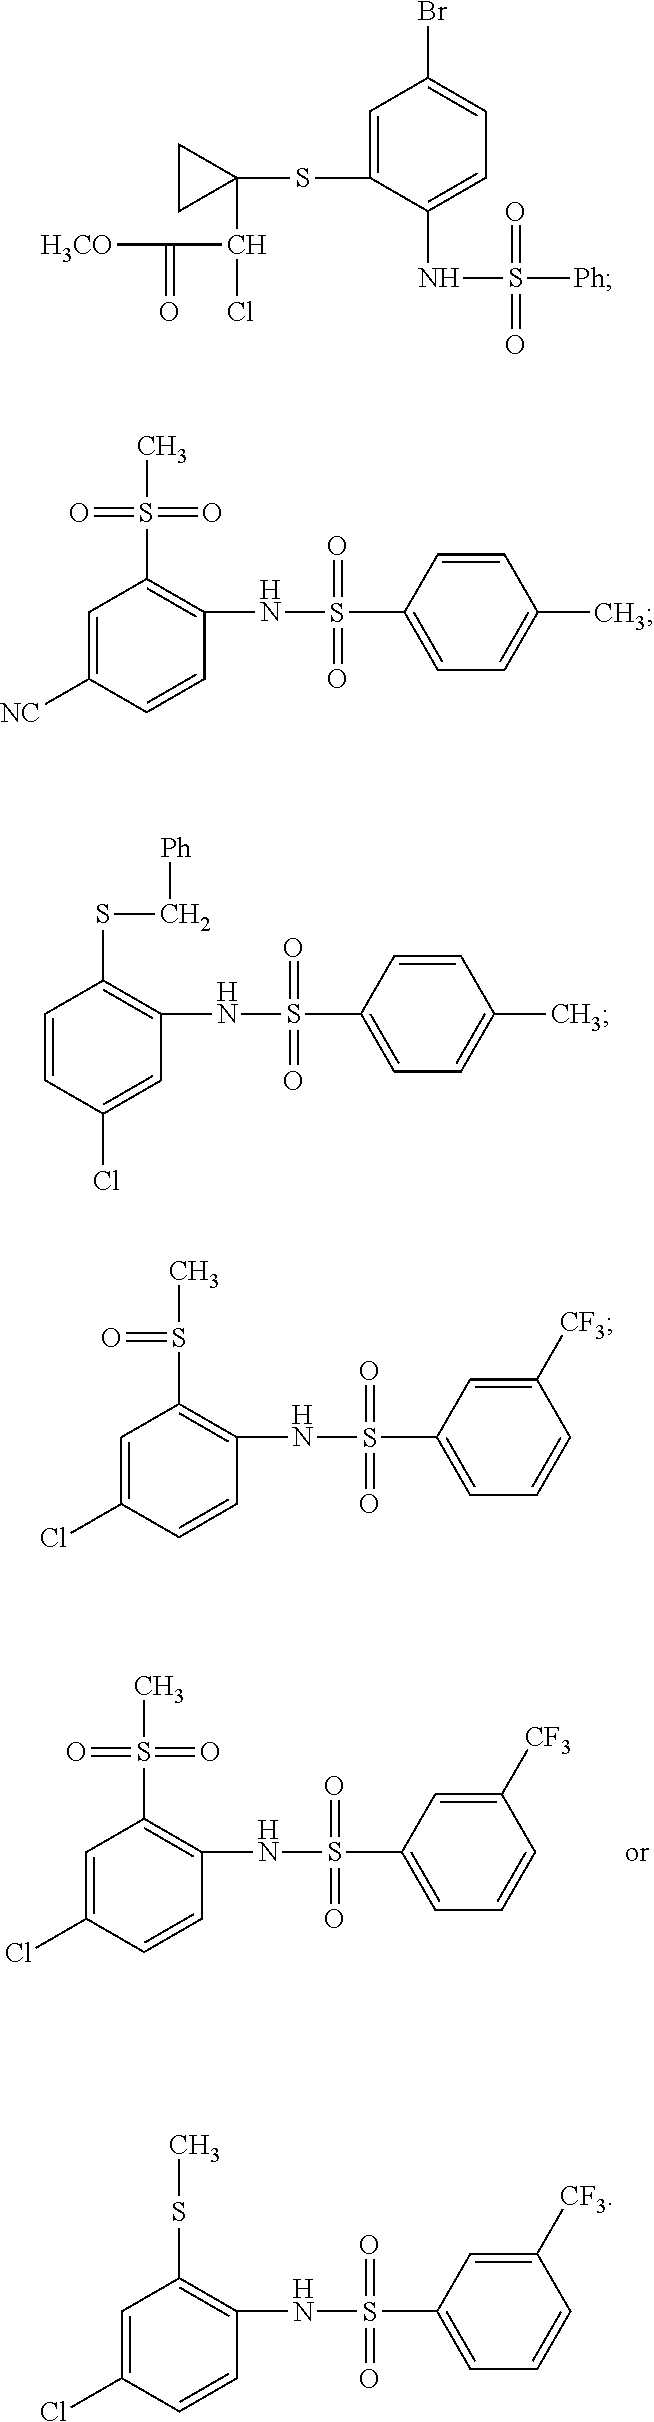 Sulfur derivatives as chemokine receptor modulators